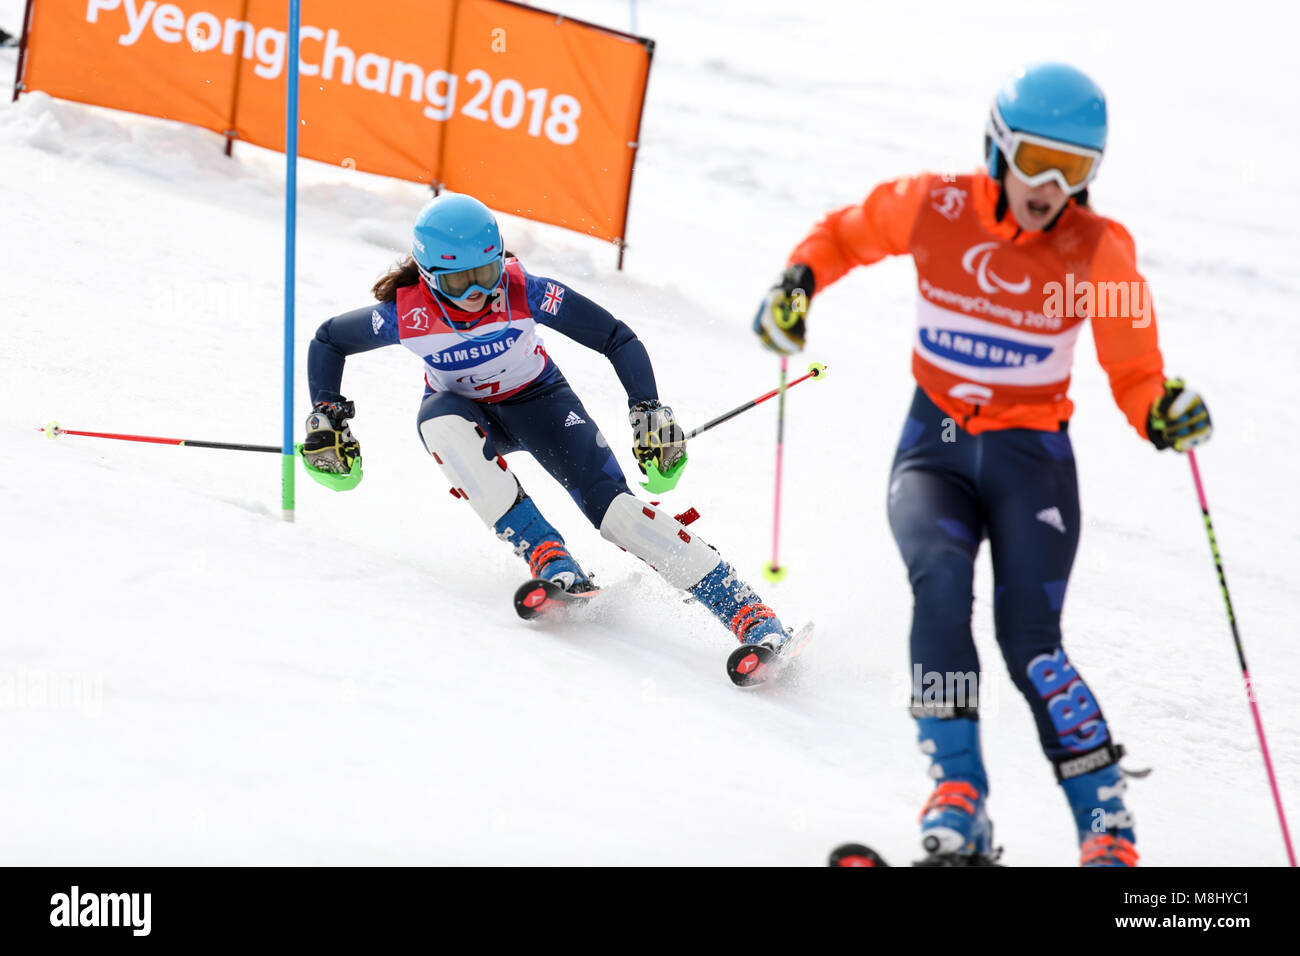 PyeongChang 18 mars . Slalom femmes. Team FR - FITZPATRICK Menna, Guide : KEHOE Jennifer Crédit : Marco Ciccolella/Alamy Live News Banque D'Images